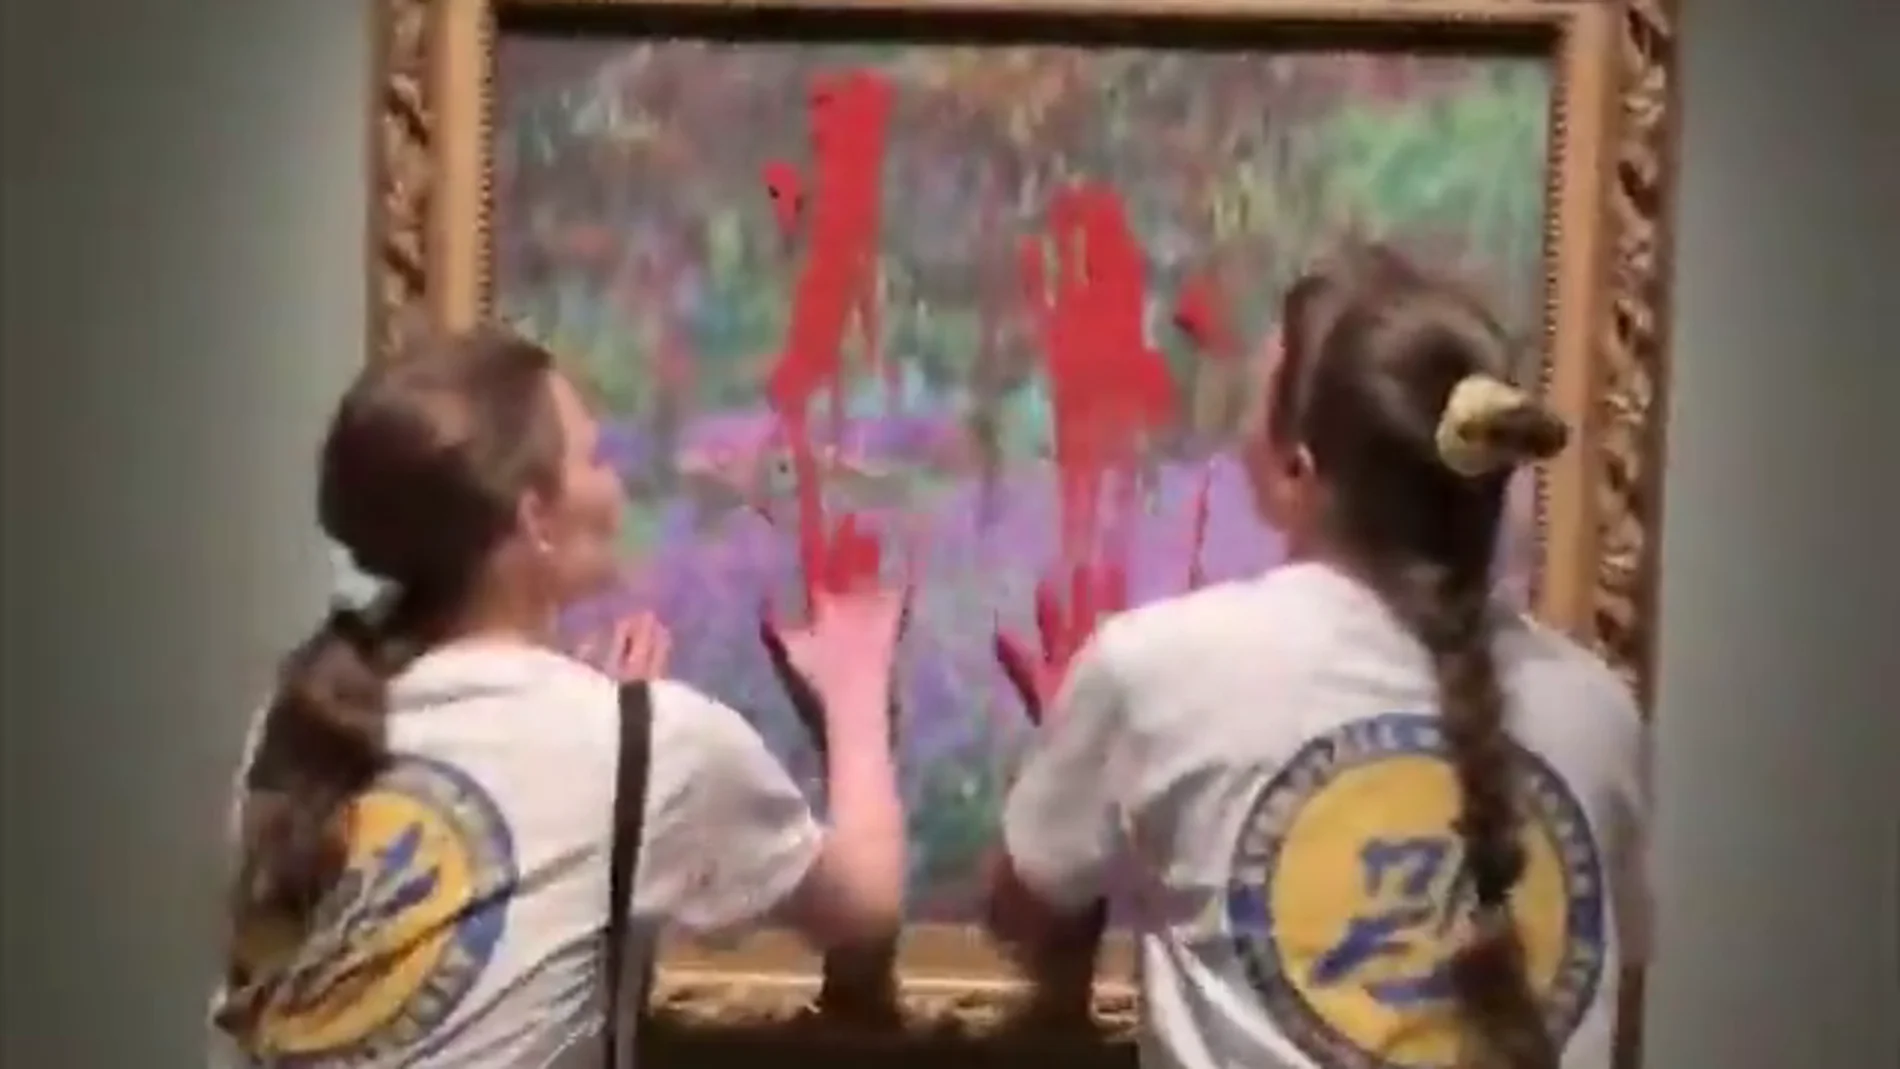 Dos activistas manchan de pintura roja un cuadro de Monet para protestar por la crisis climática en Suecia